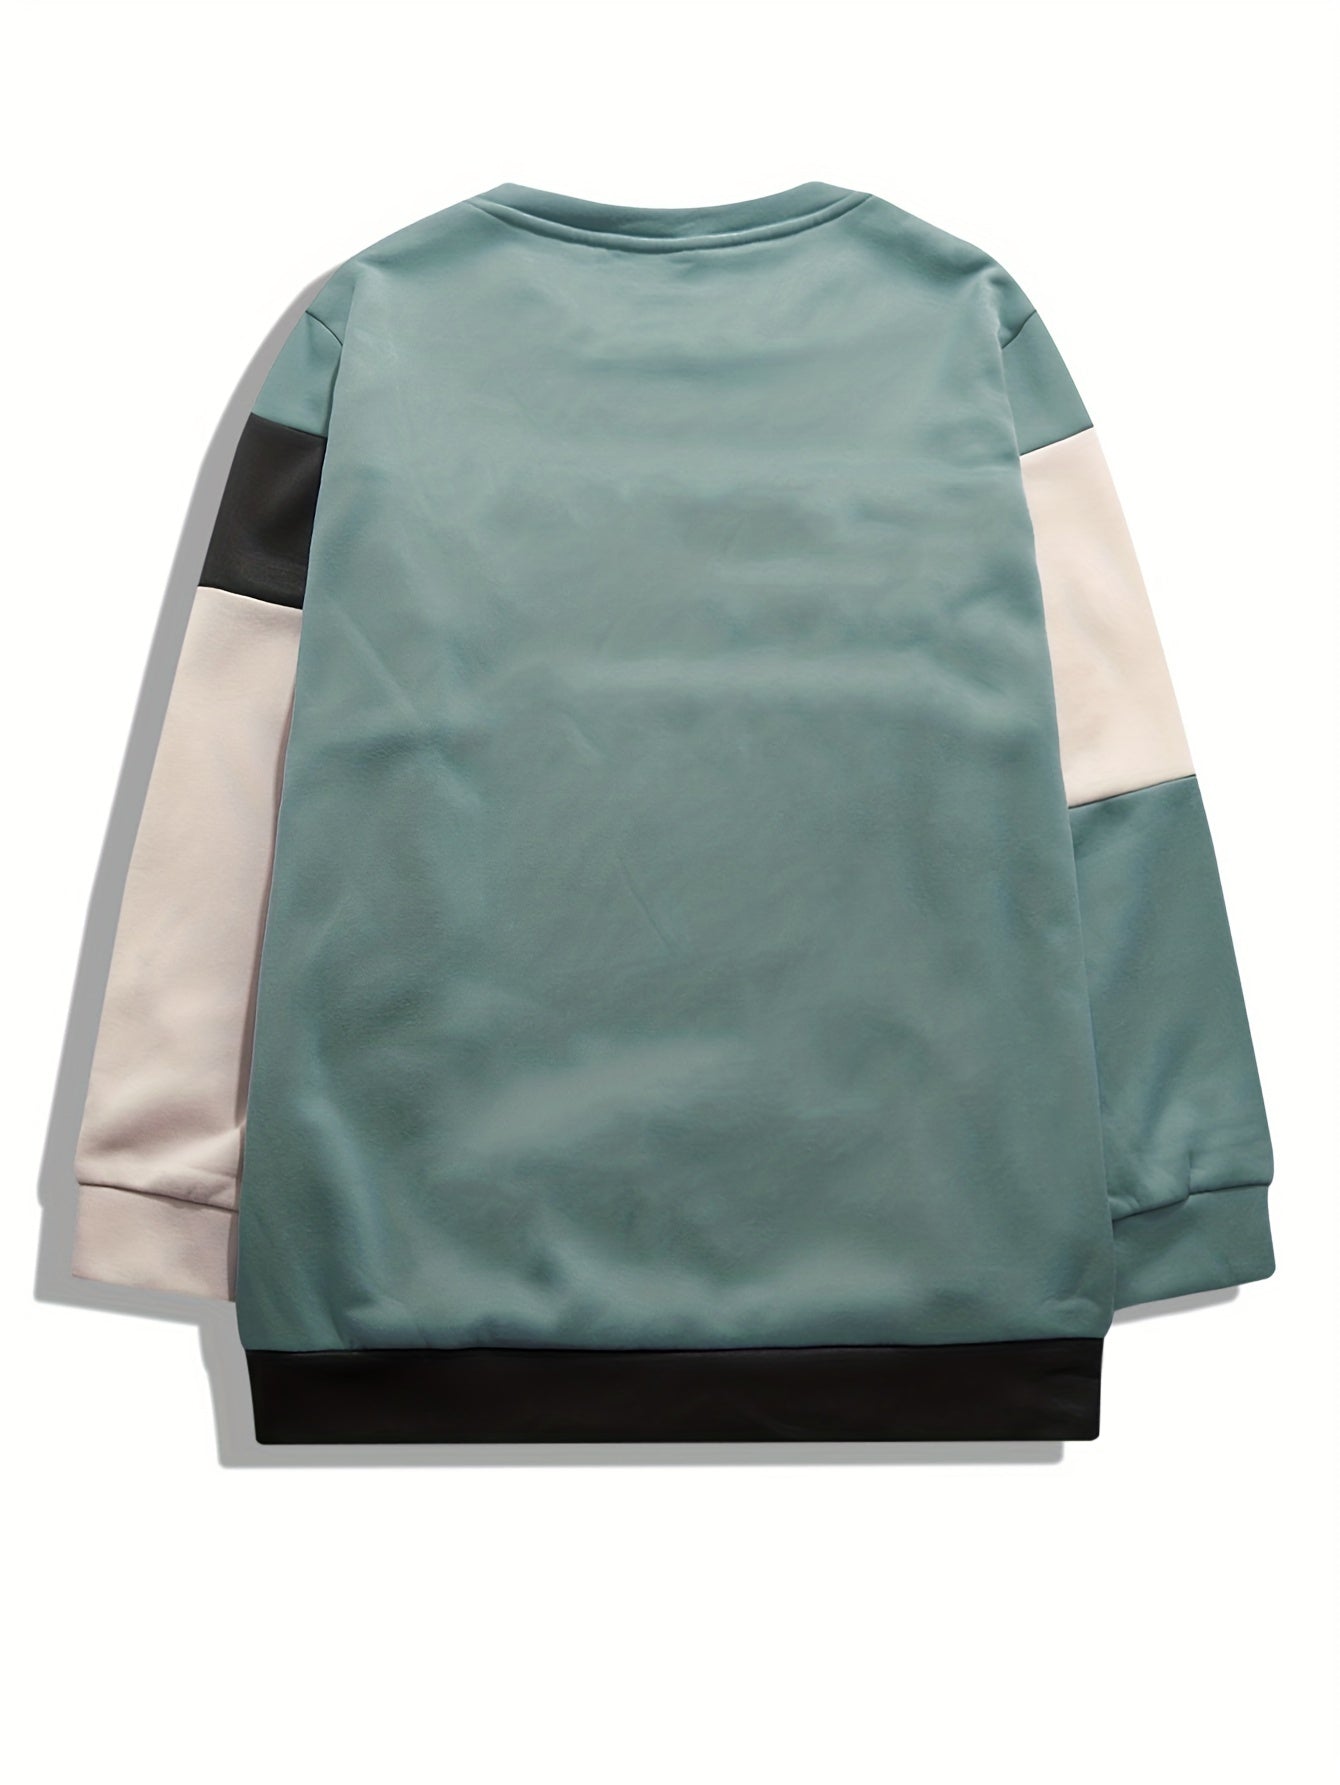 gbolsos  Colorblock Sweatshirt, Men's Casual Solid Color Slightly Stretch Crew Neck Pullover Sweatshirt For Spring Fall